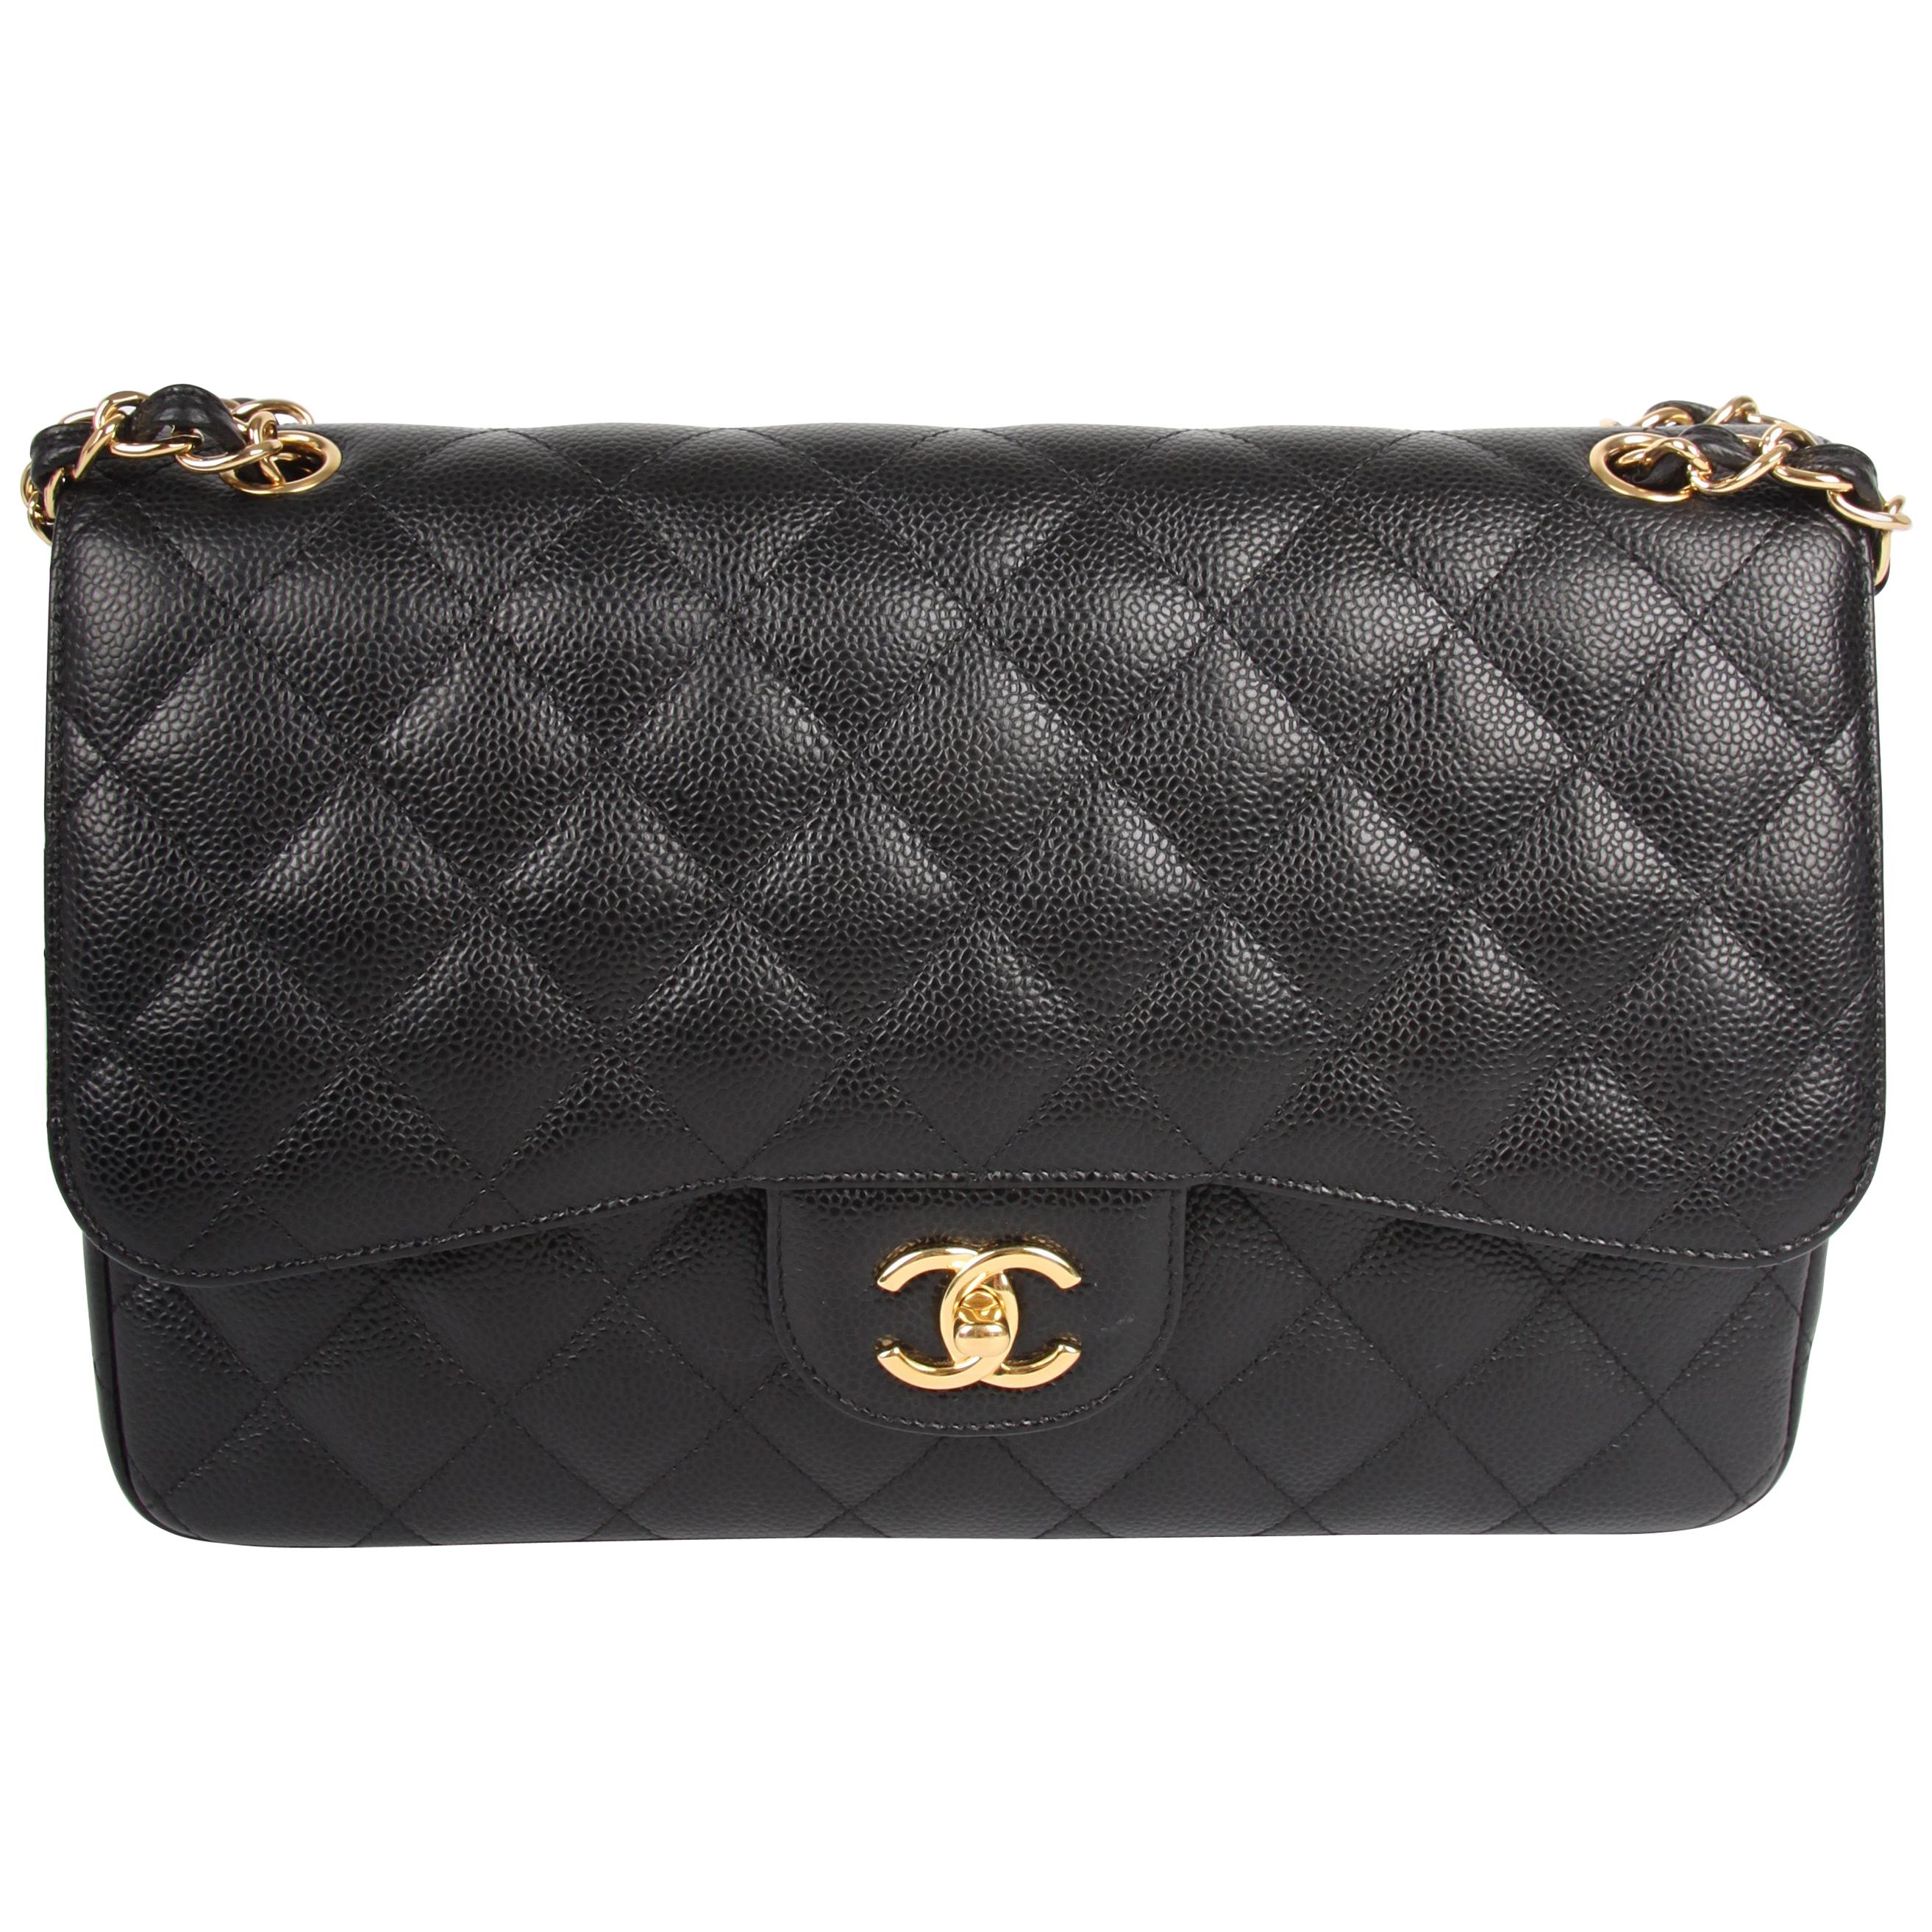 Chanel 2.55 Timeless black caviar leather Jumbo Double Flap Bag 